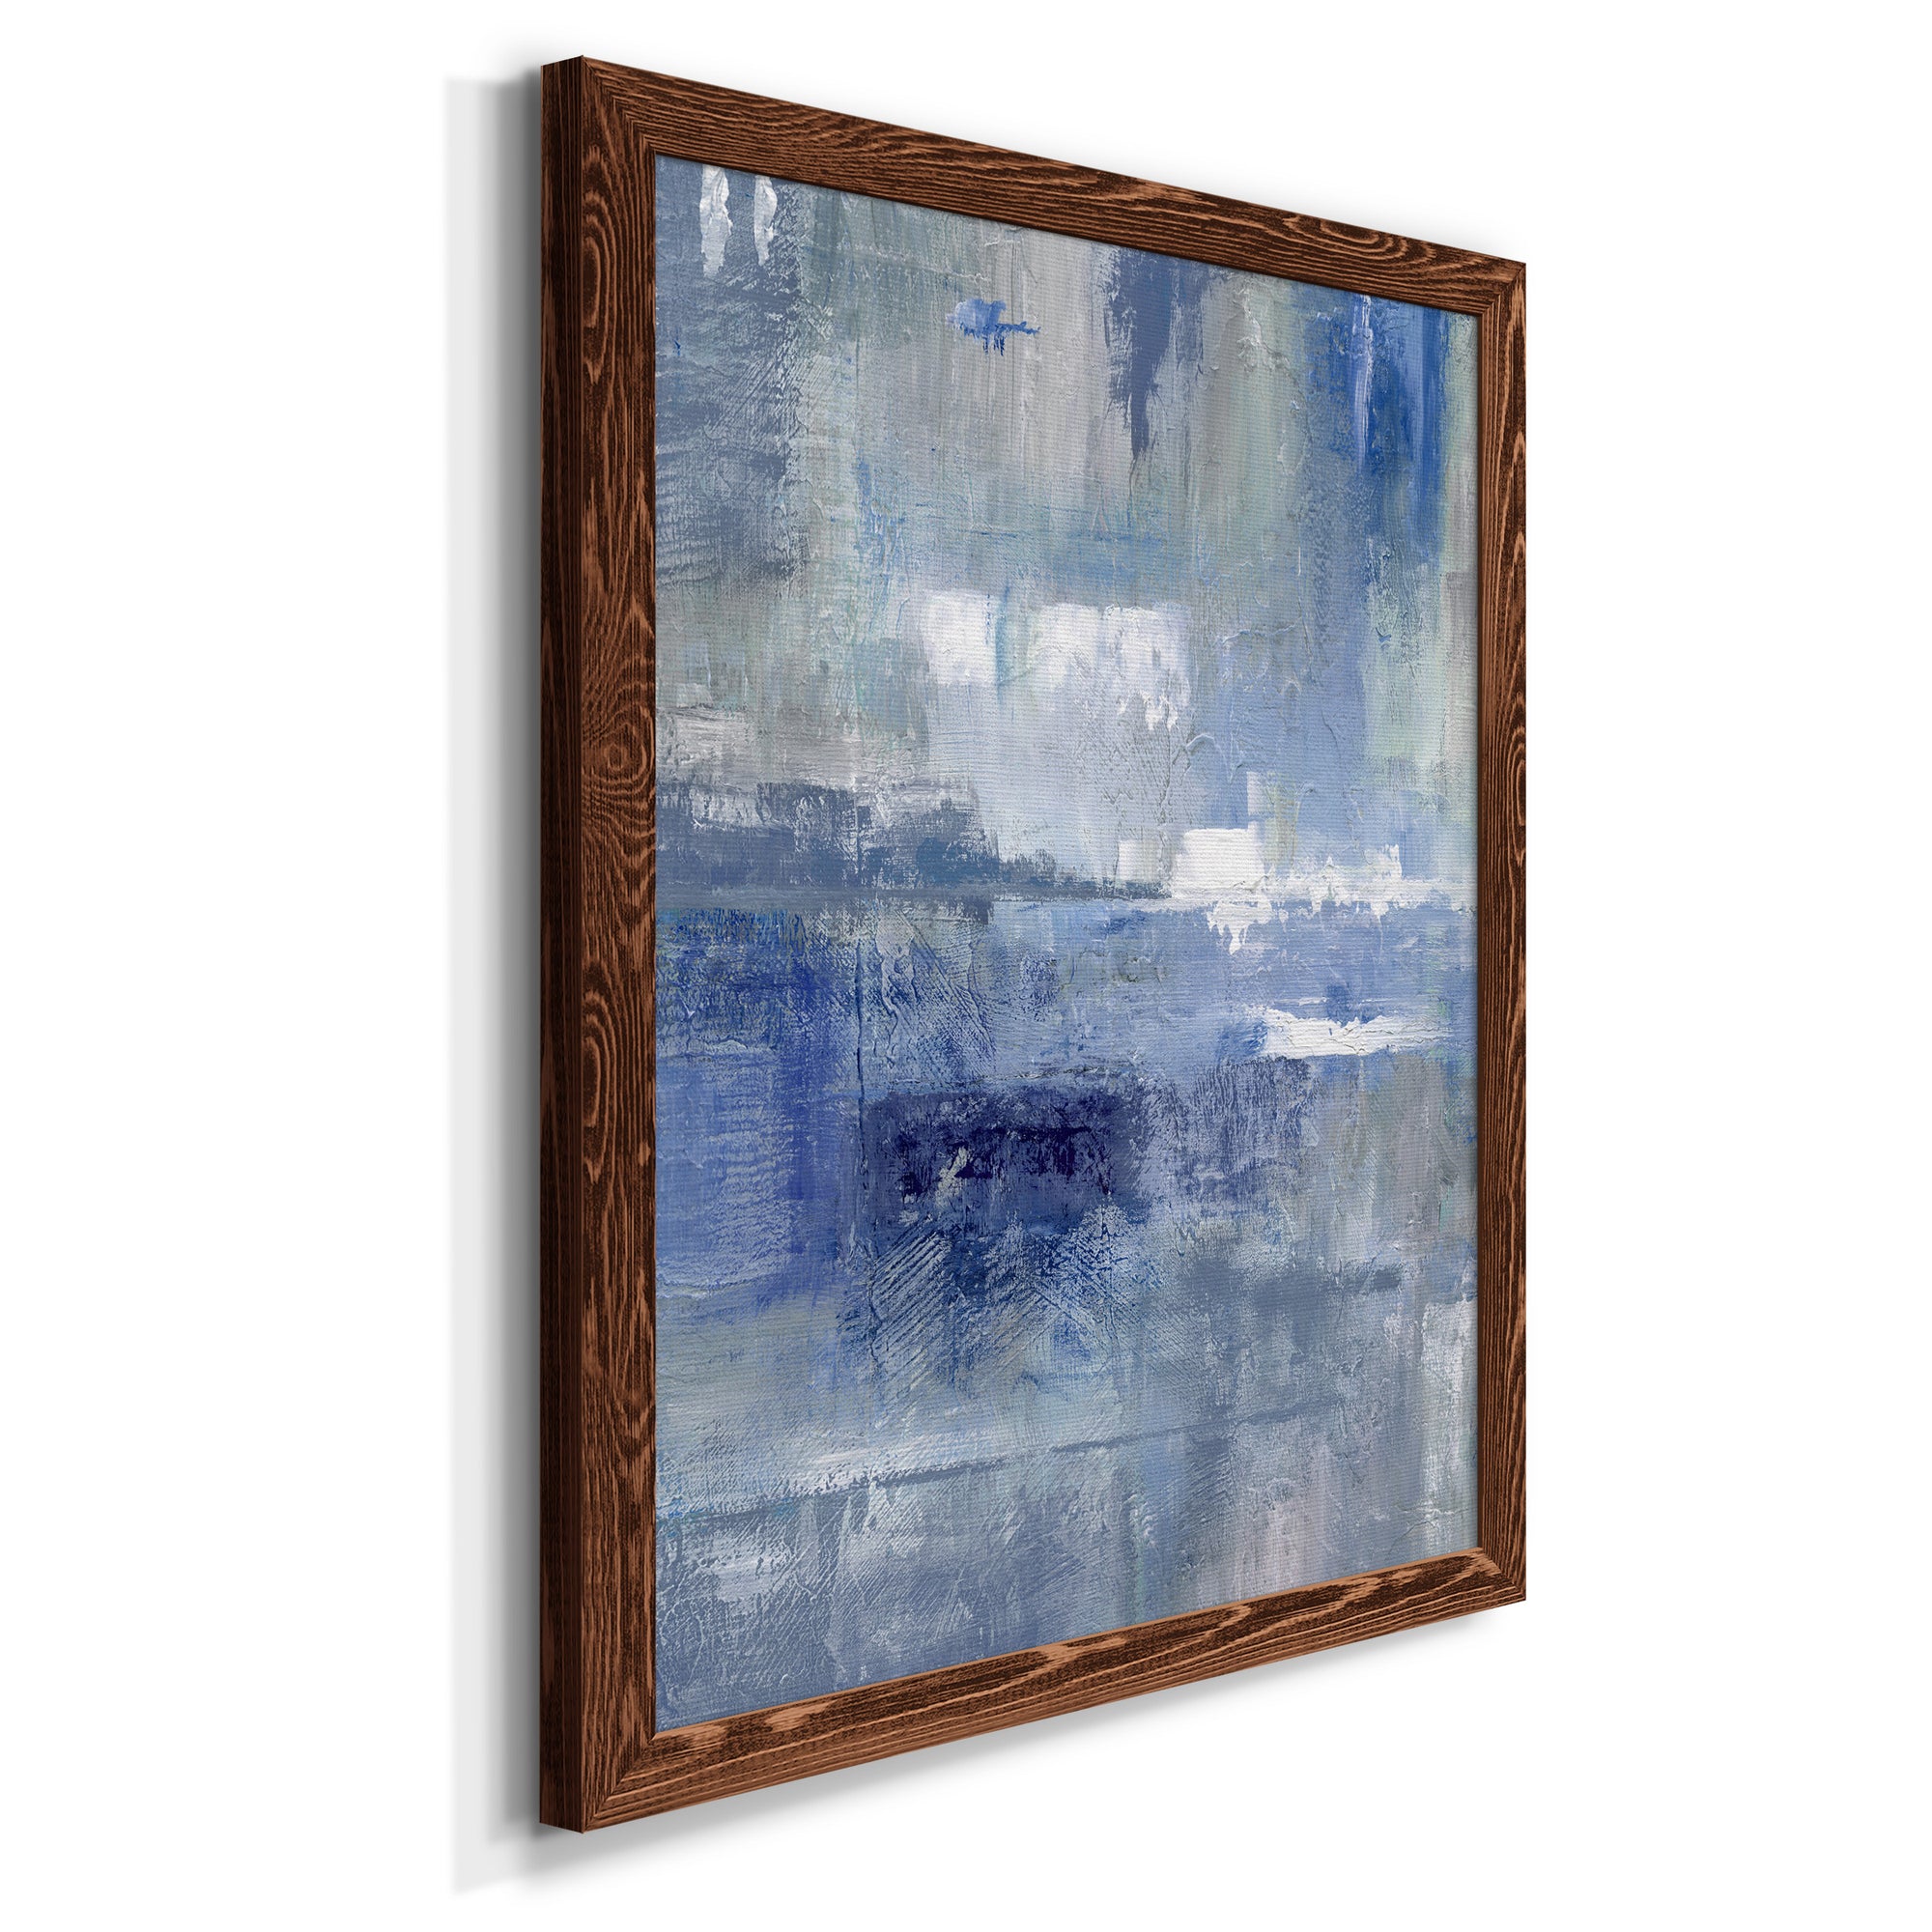 Bay View Indigo - Premium Canvas Framed in Barnwood - Ready to Hang